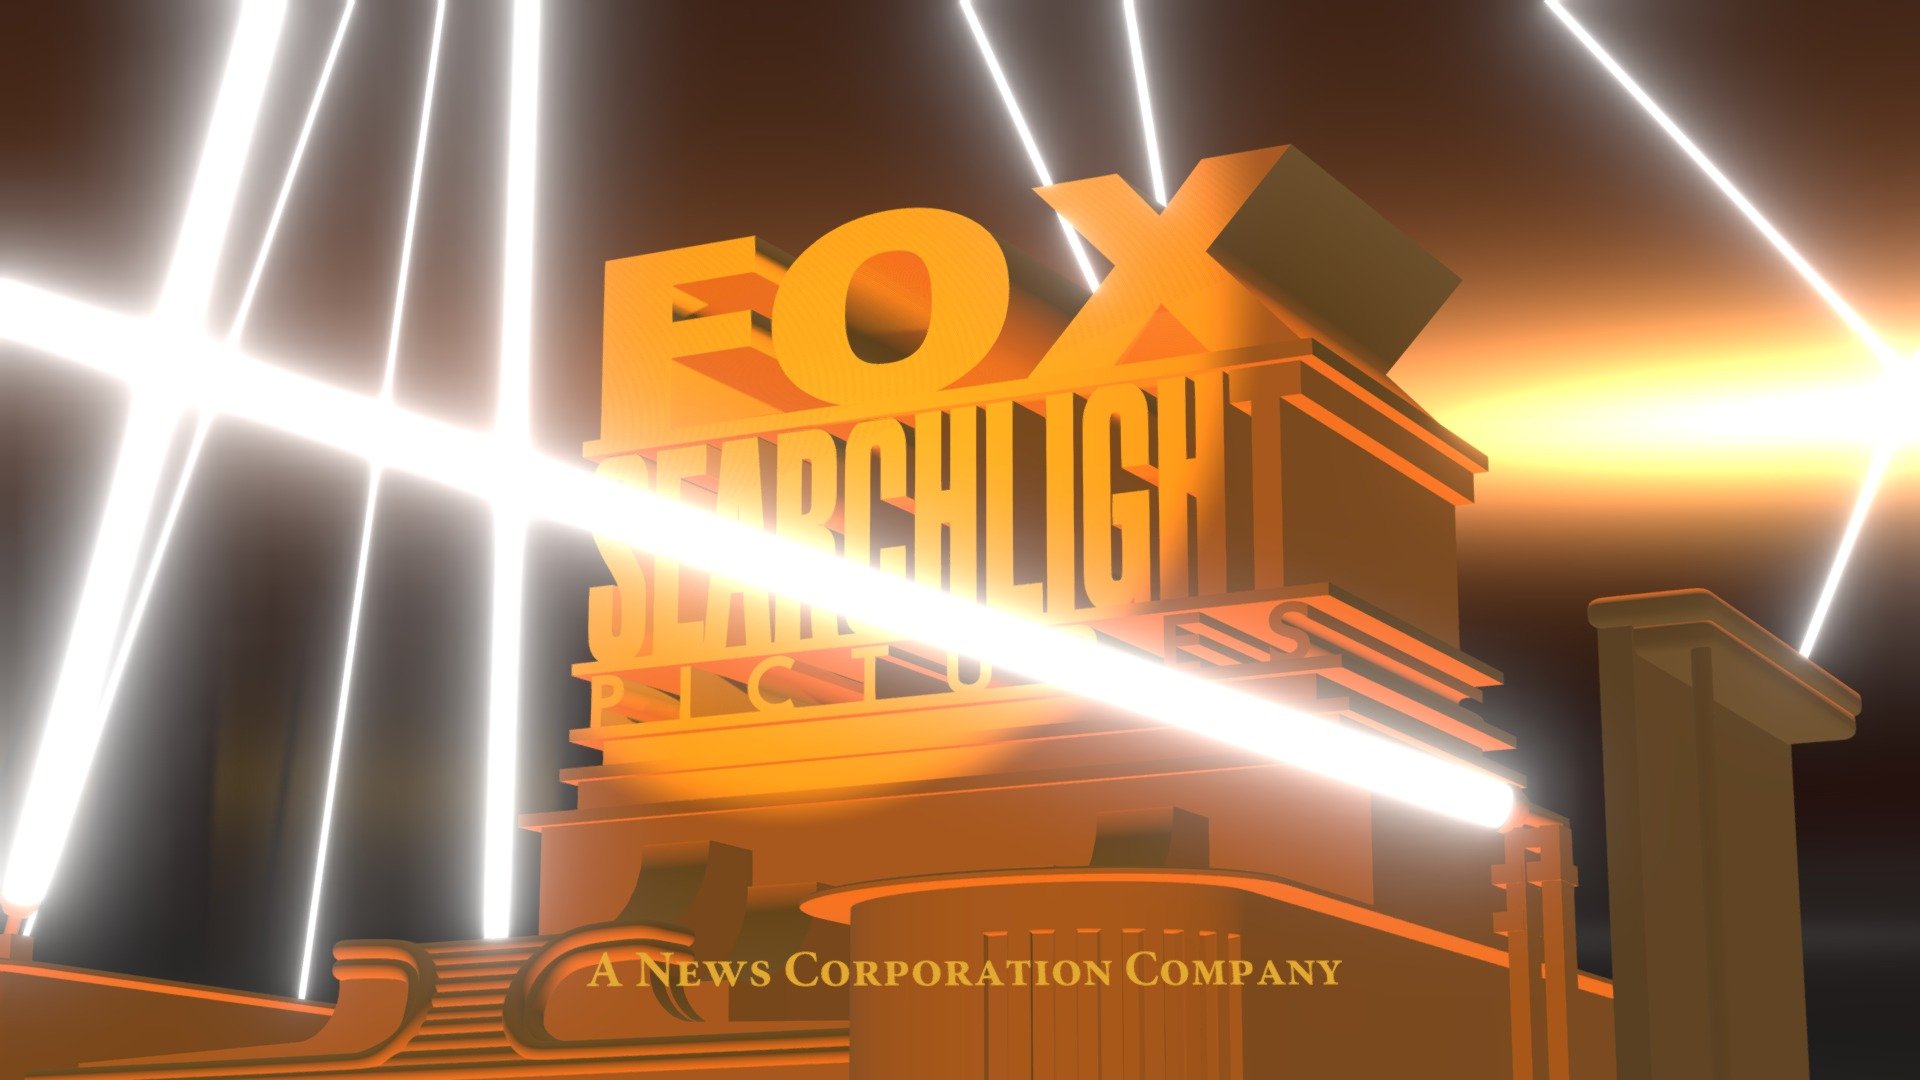 Fox searchlight